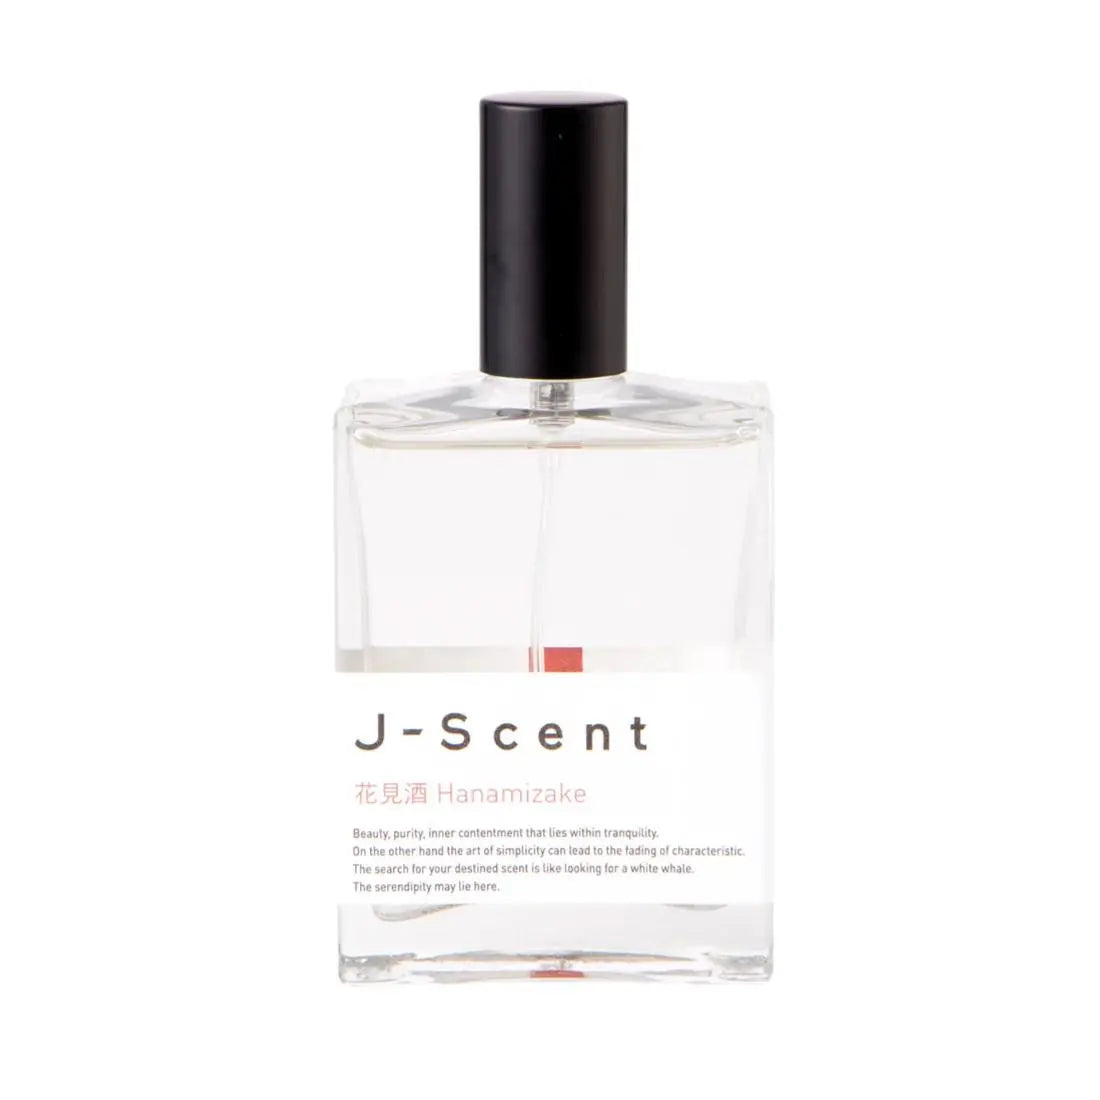 J-scent Hanamizake - 50ml